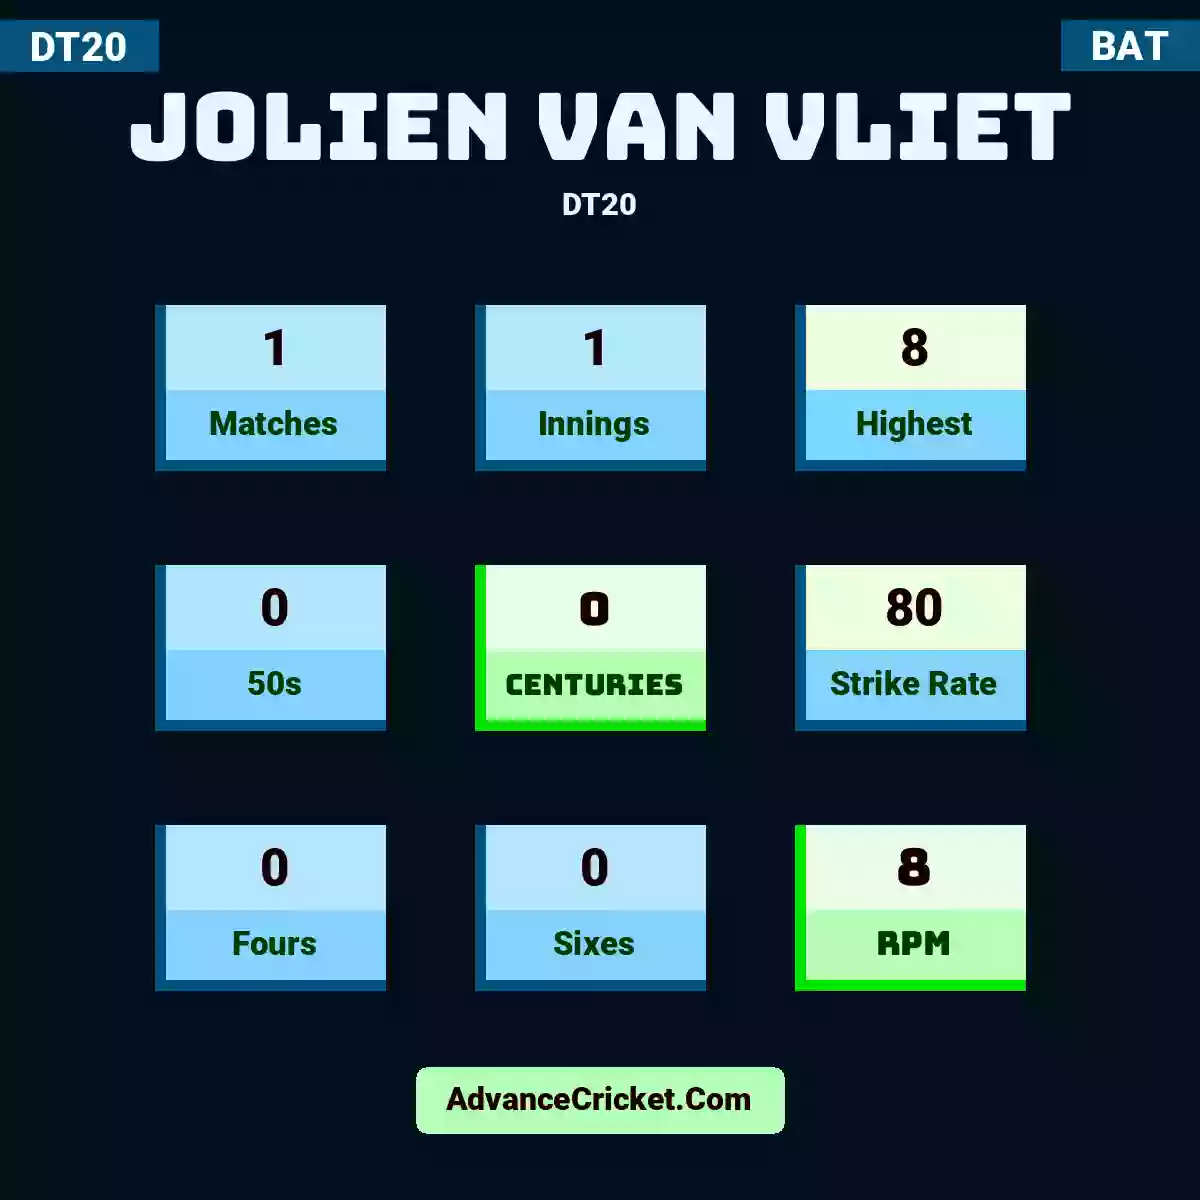 Jolien van Vliet DT20 , Jolien van Vliet played 1 matches, scored 8 runs as highest, 0 half-centuries, and 0 centuries, with a strike rate of 80. J.Vliet hit 0 fours and 0 sixes, with an RPM of 8.